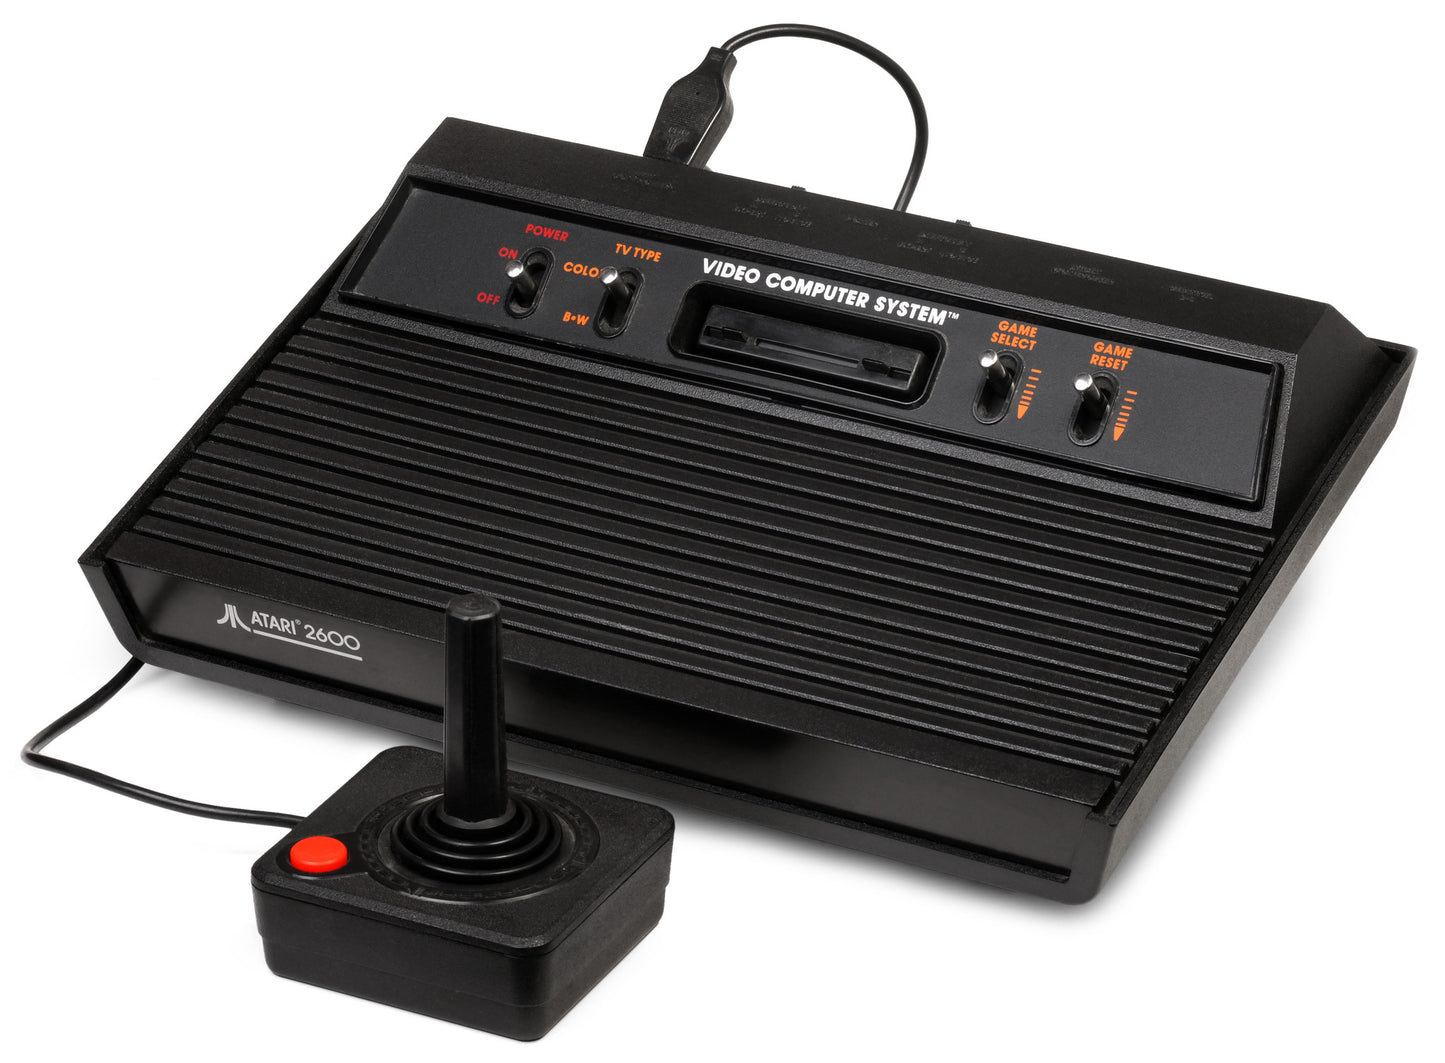 Power Supply for Atari VCS 2600